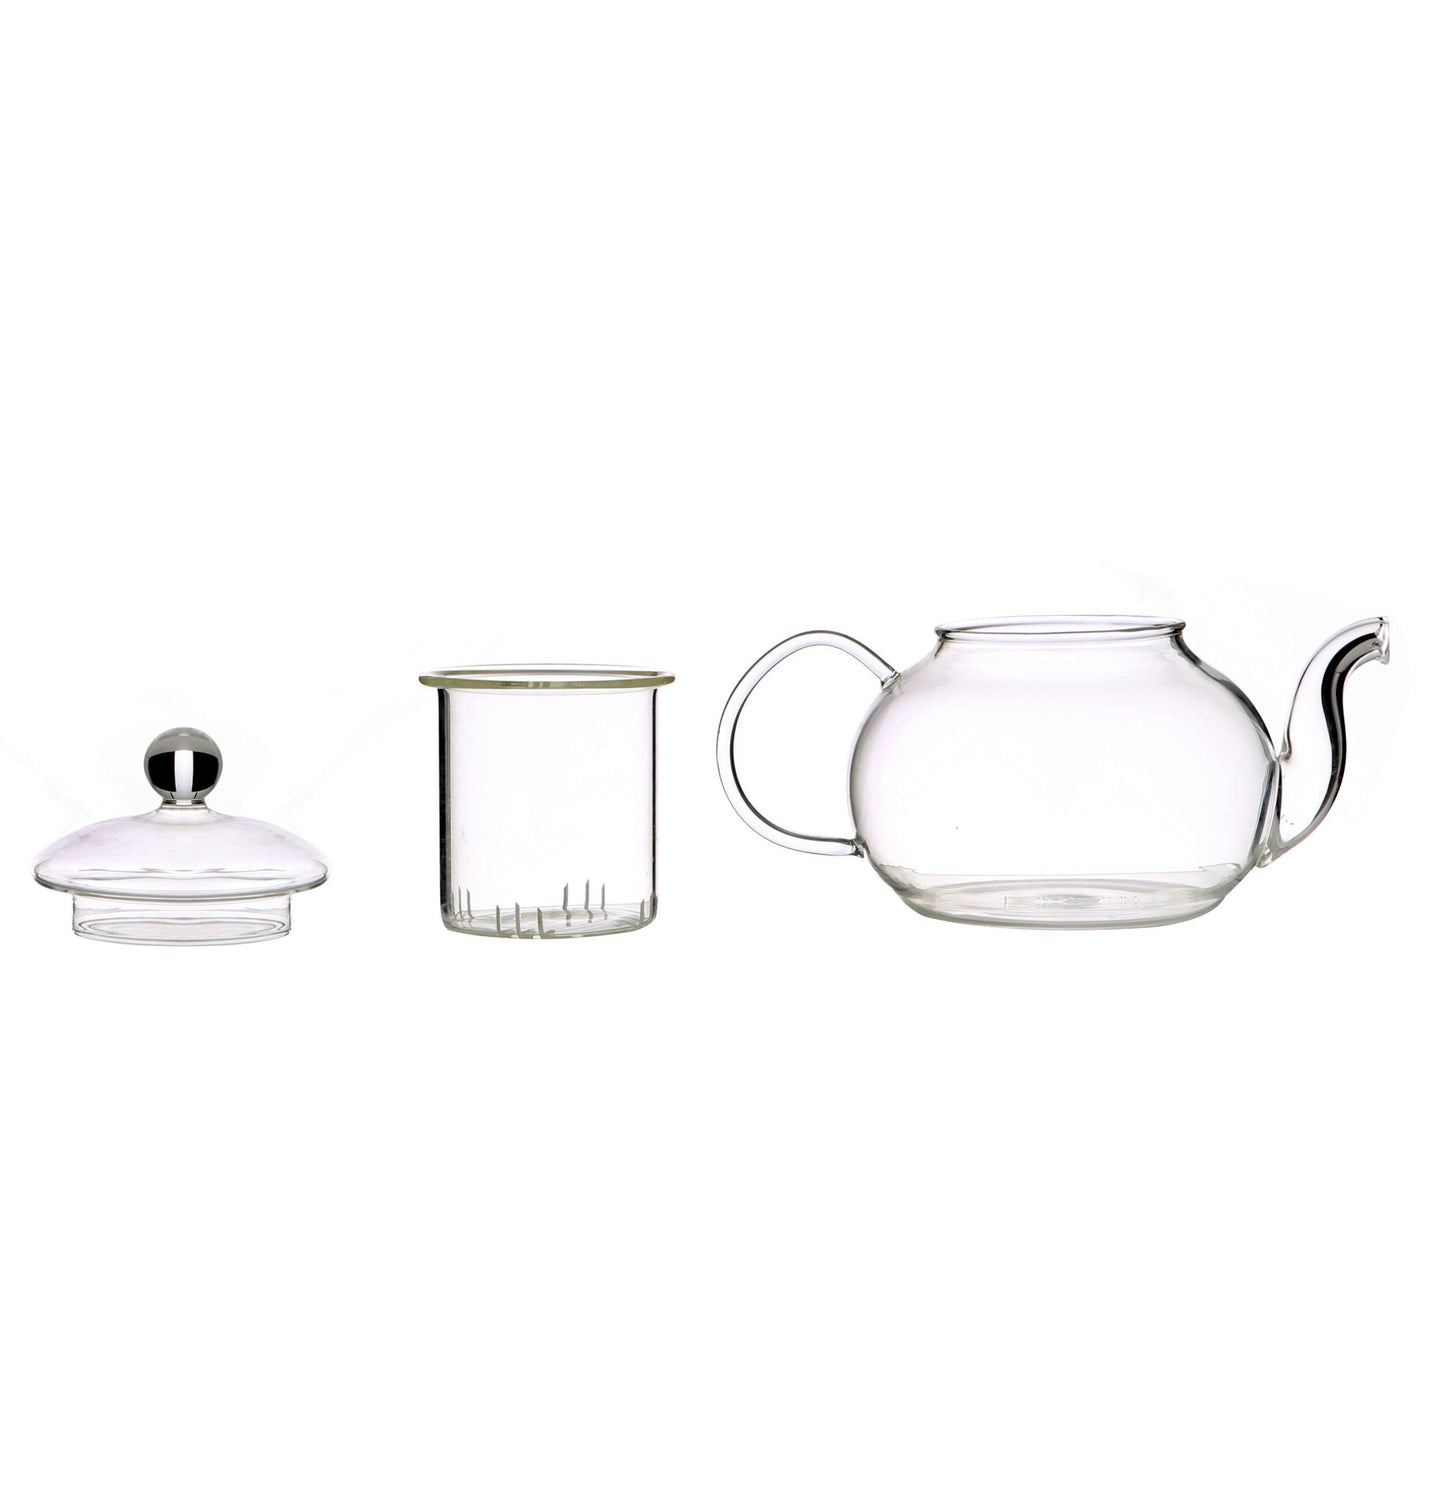 Glass teapot by Leaf & Bean